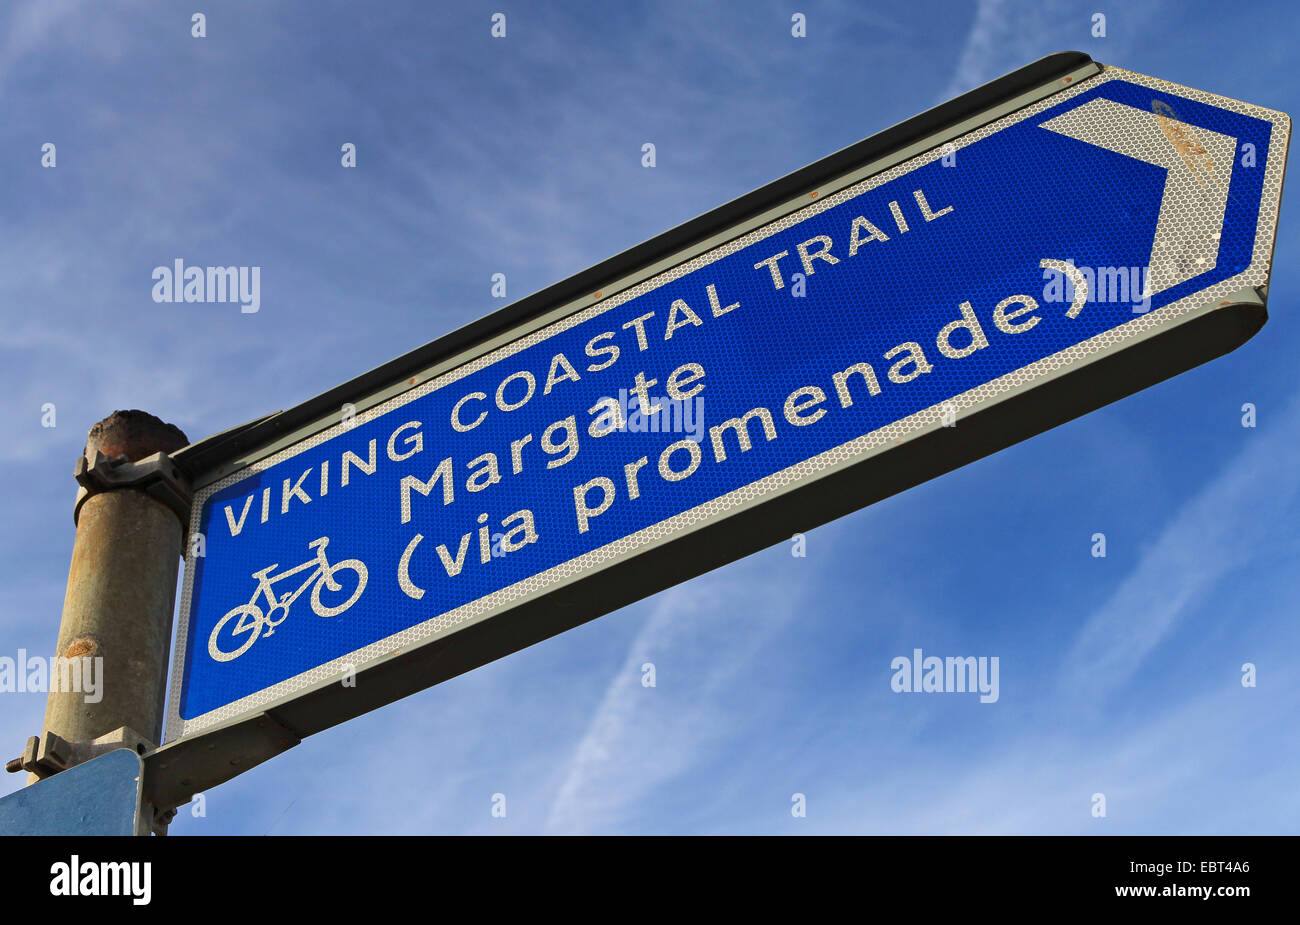 East Kent coast - Minnis Bay, England - Viking Coastal Trail signpost against a bright blue sky Stock Photo